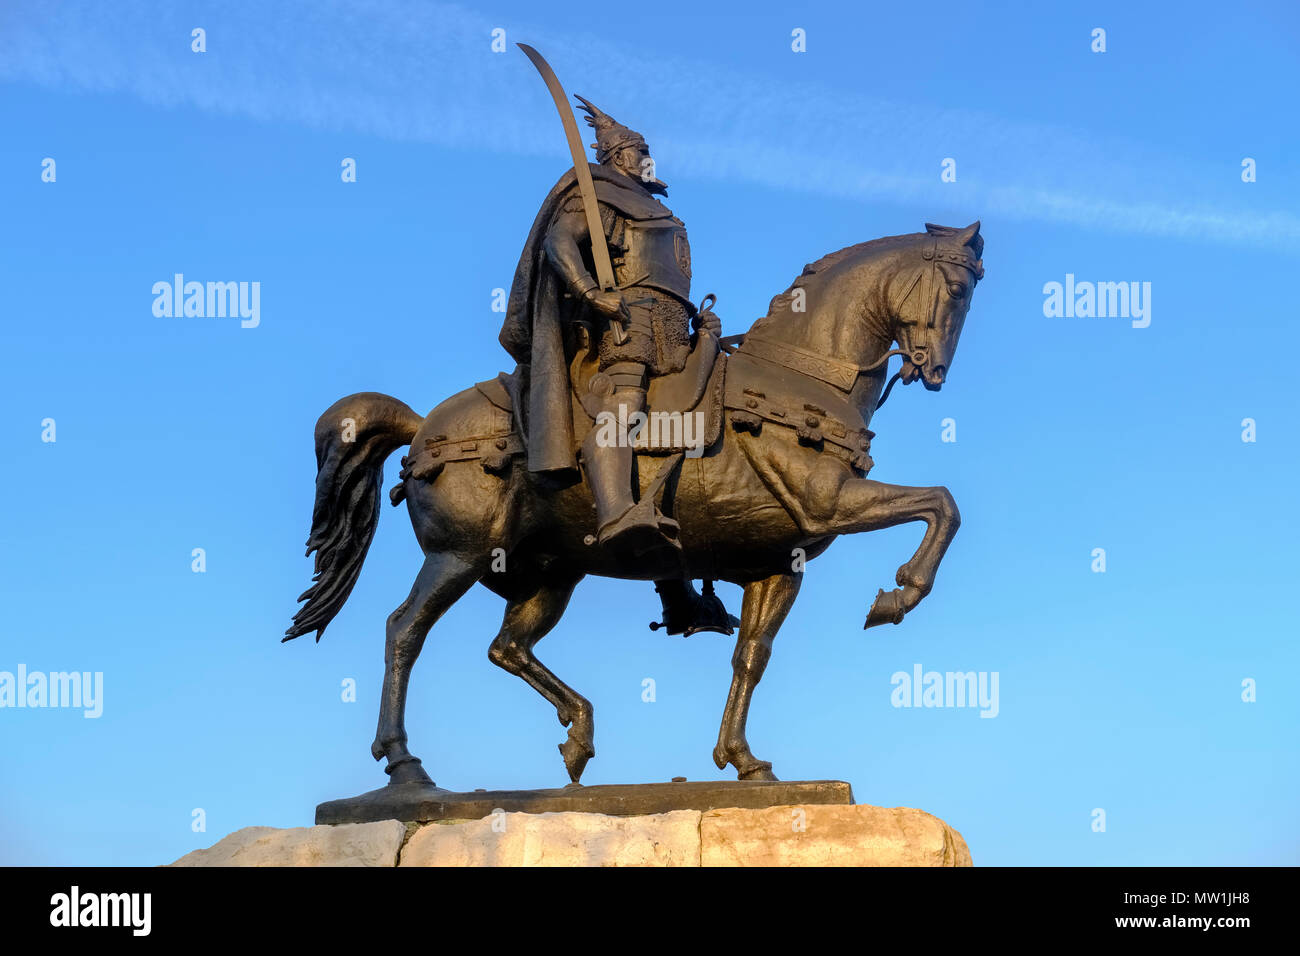 Monumento di Skanderbeg, statua equestre Skënderbej, albanese eroe nazionale Skanderbeg, Piazza Skanderbeg, Tirana, Albania Foto Stock